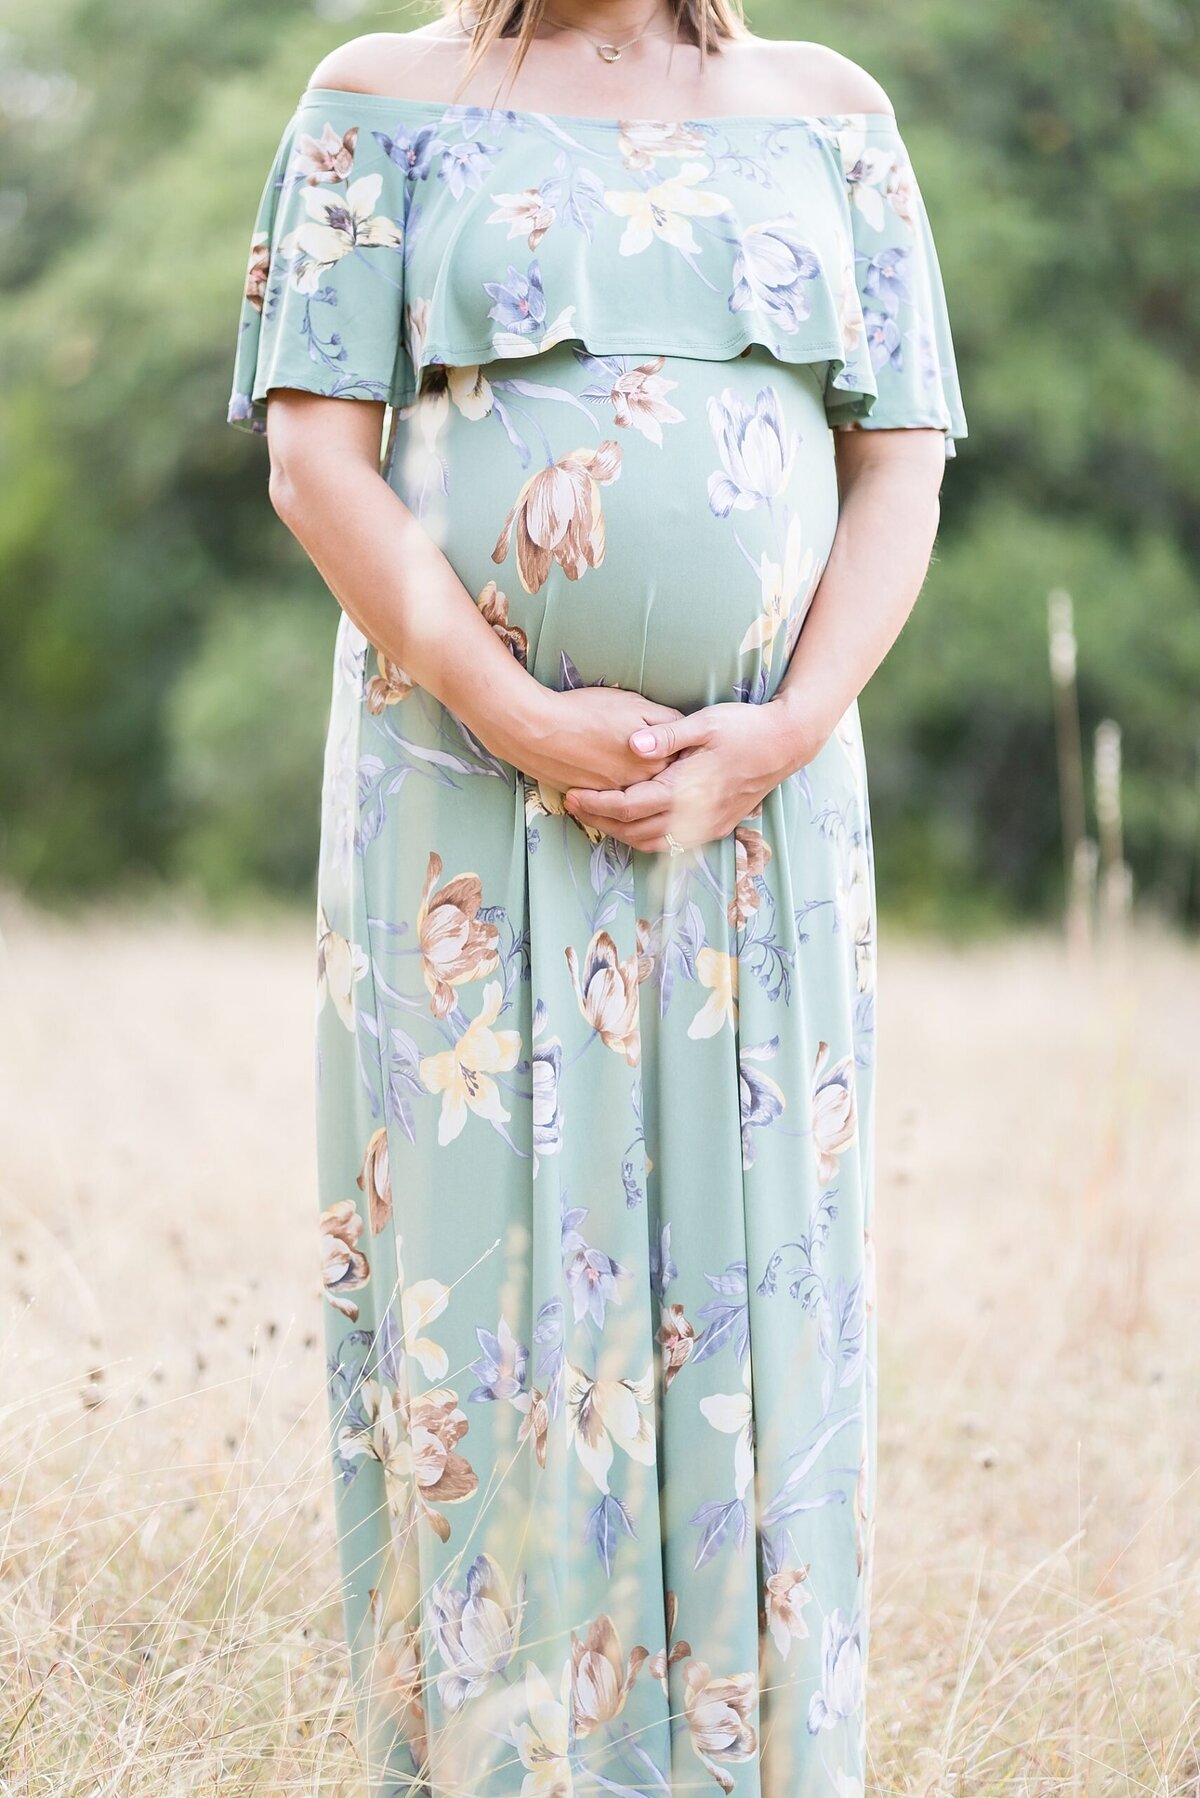 austin-maternity-photographer_2021-25-scaled